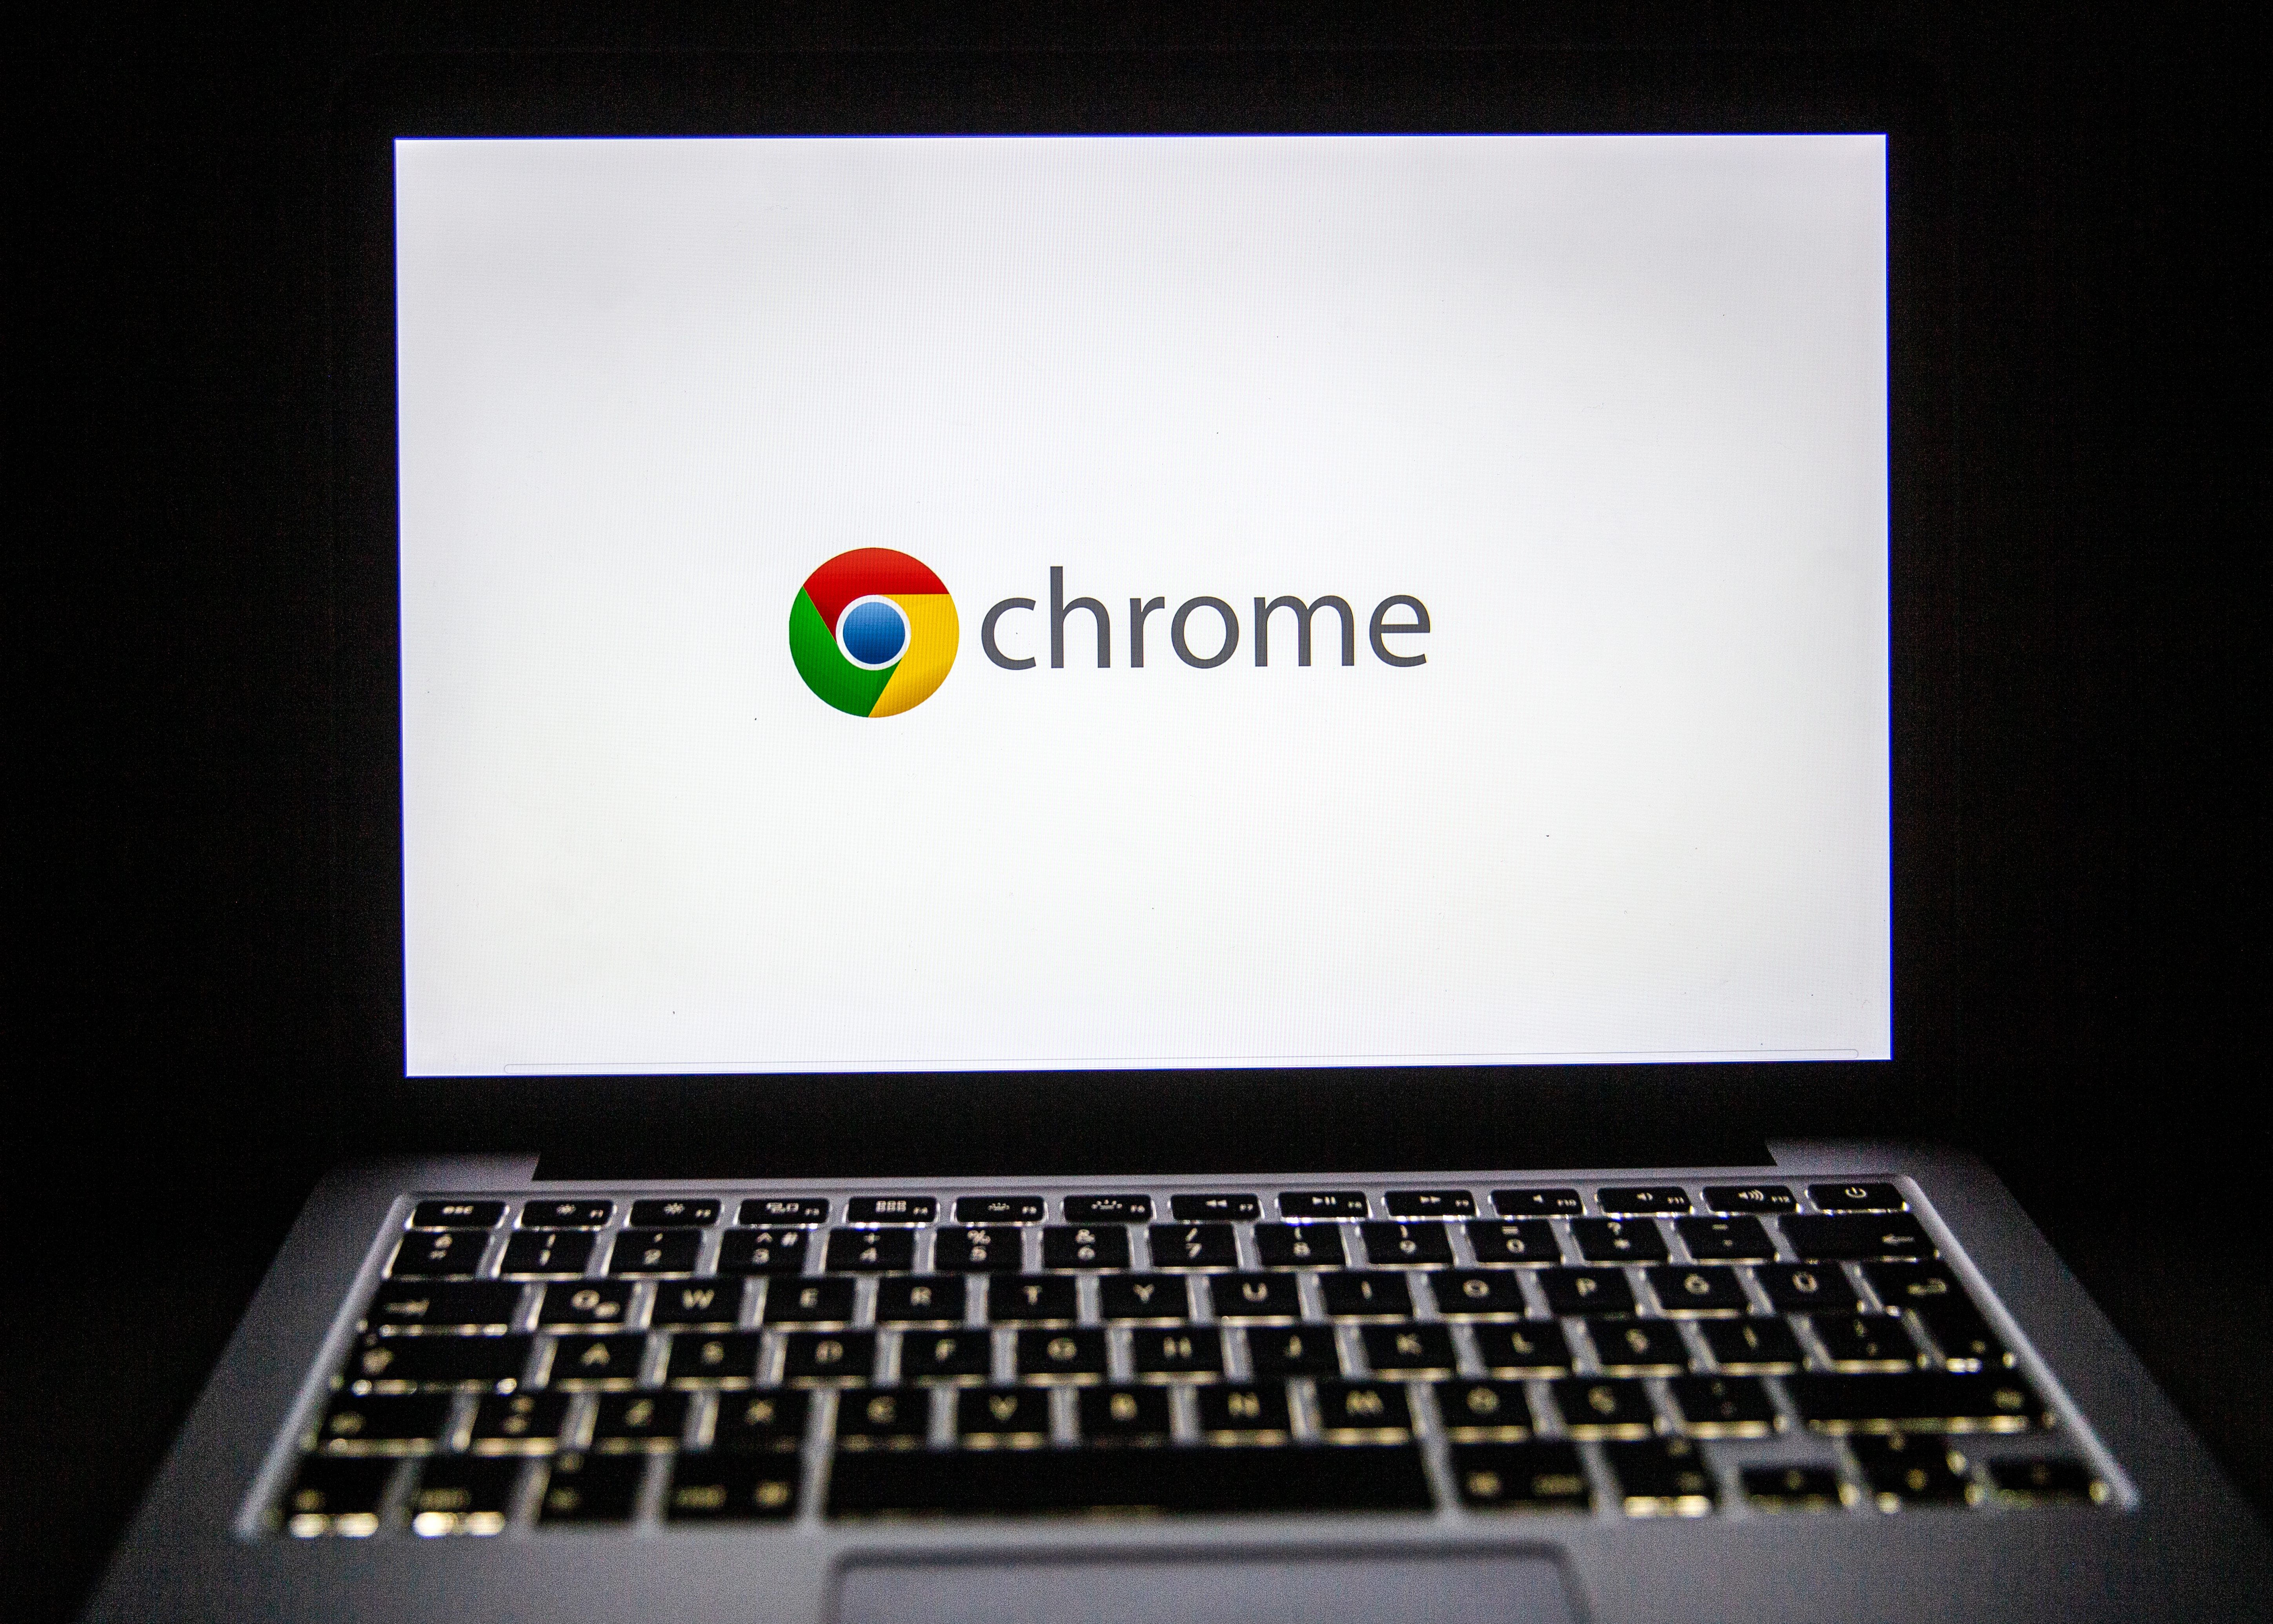 Google Chrome’s logo is seen on a laptop screen.